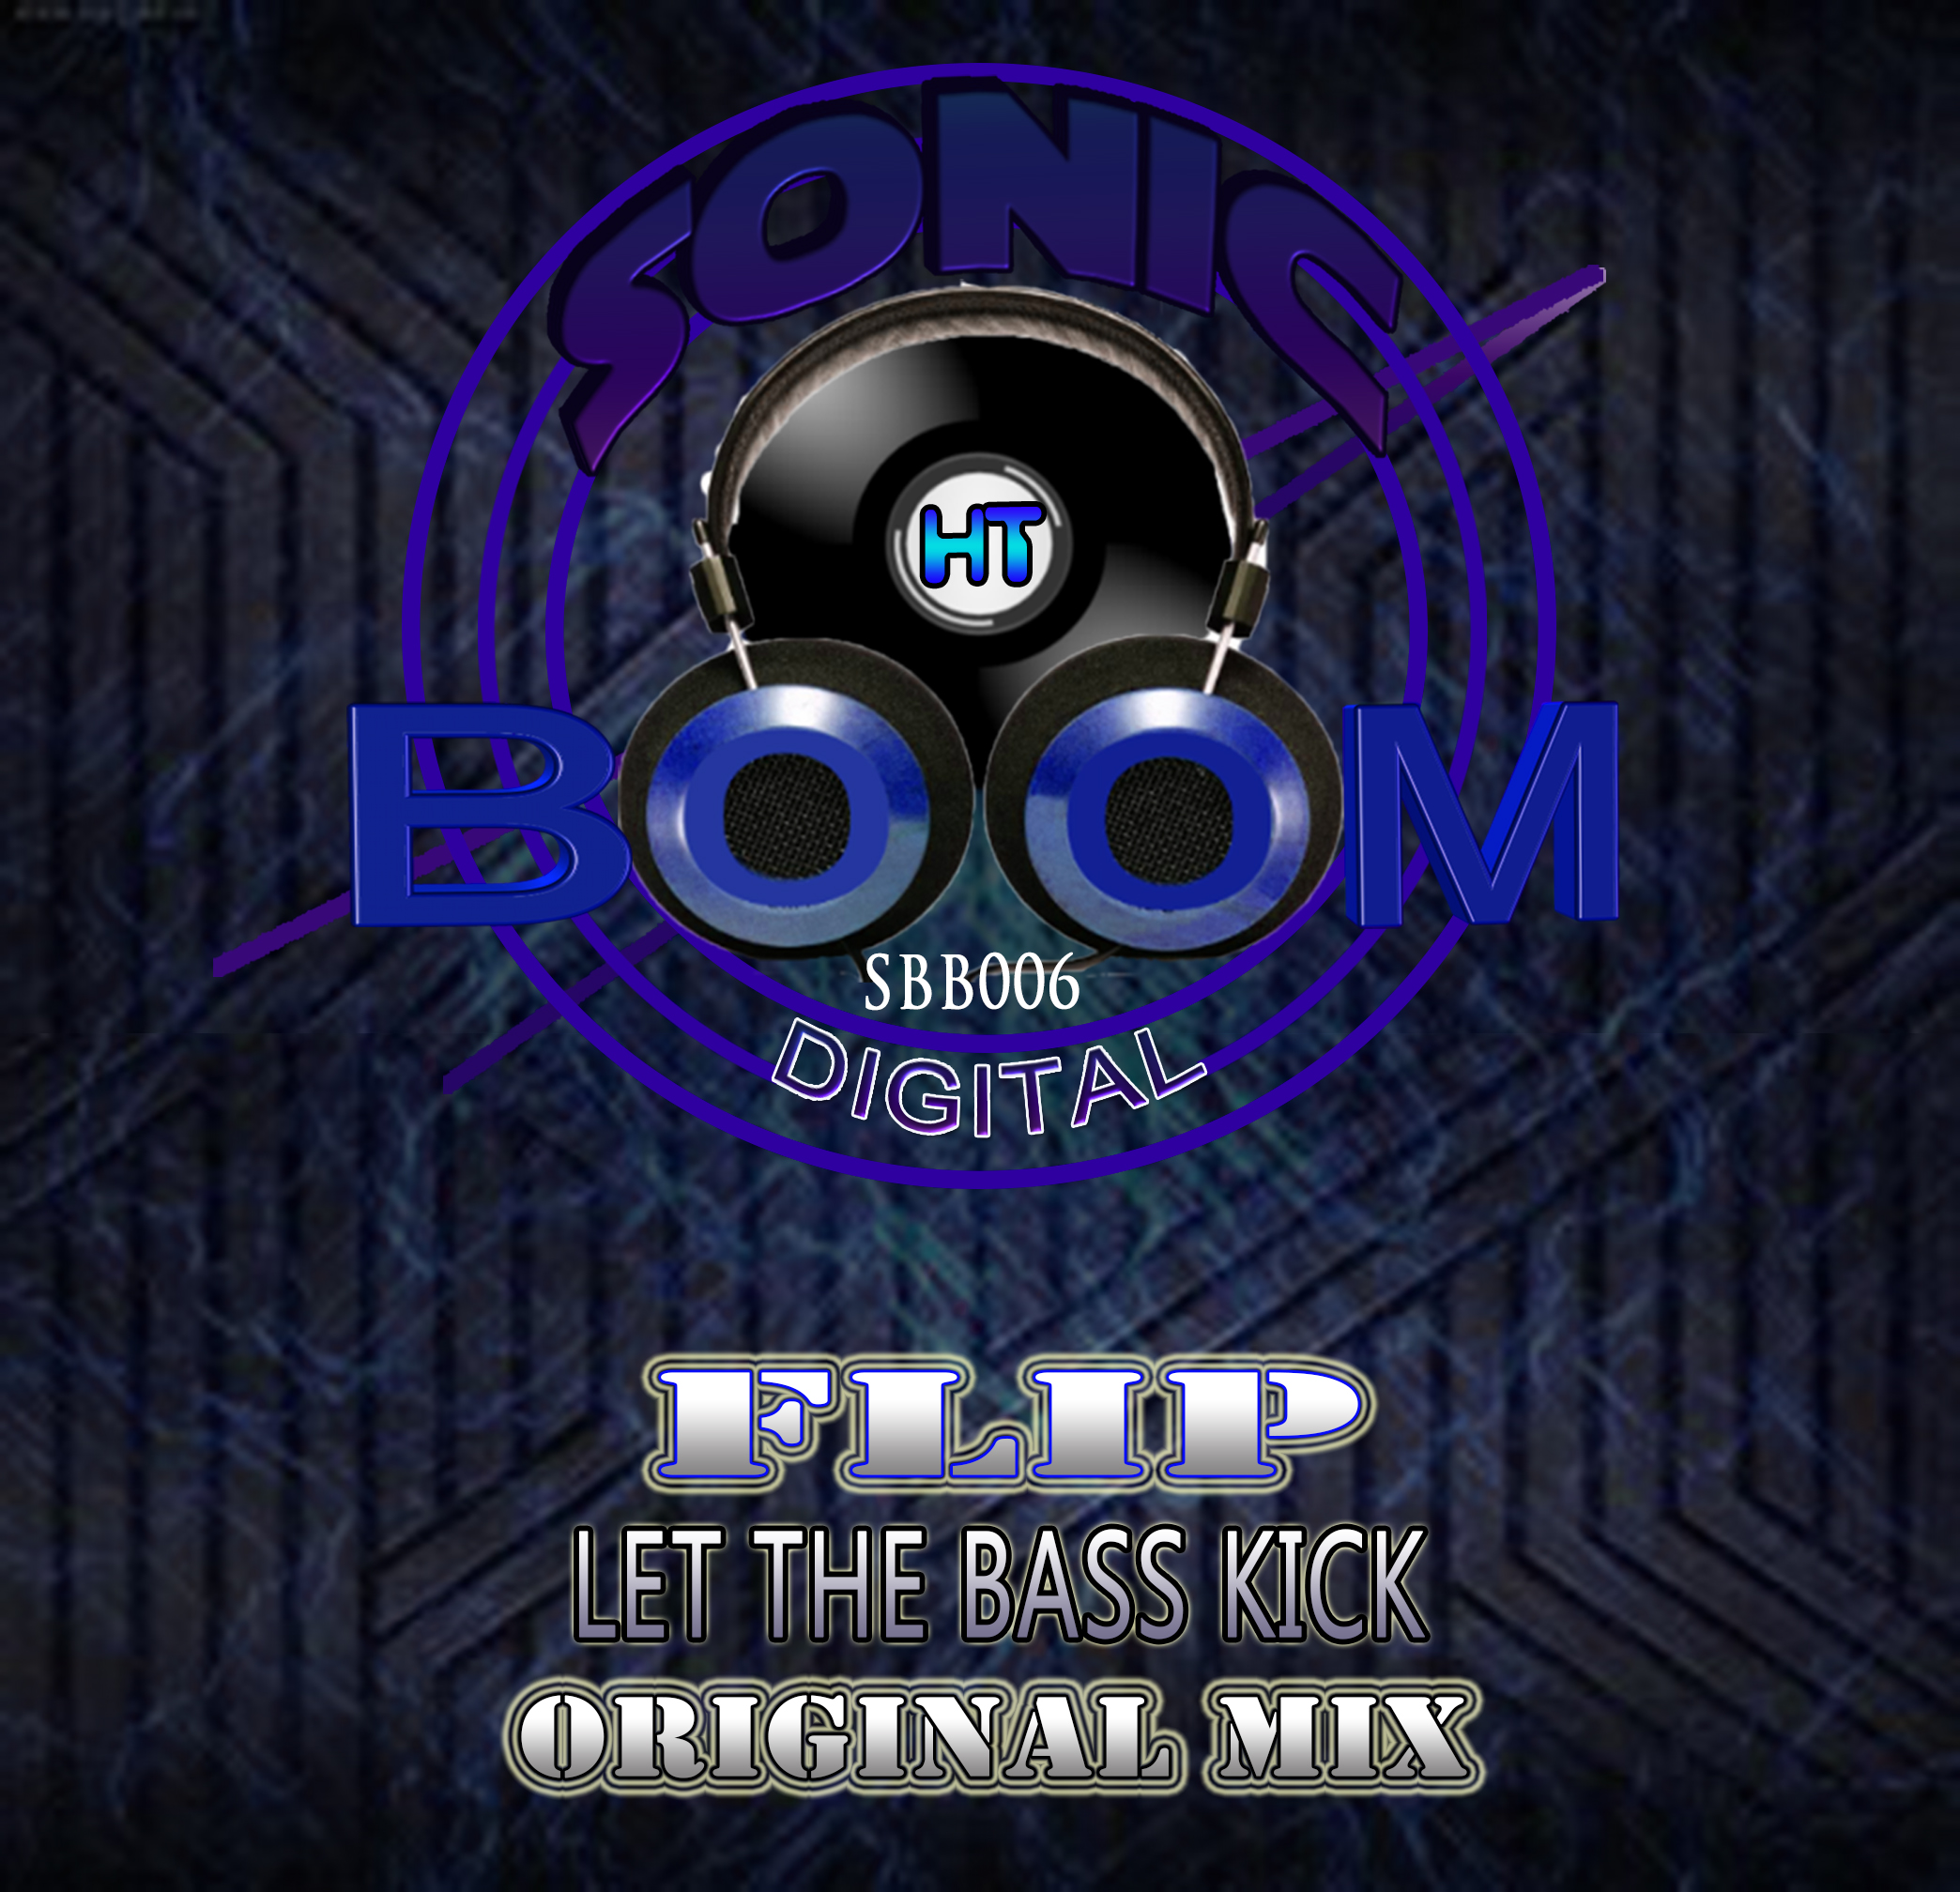 Dj bass kick. Bass Kick. DJ Braun Let the Bass Kick. Sonic Boom музыка mp3. Флип в Музыке что это.